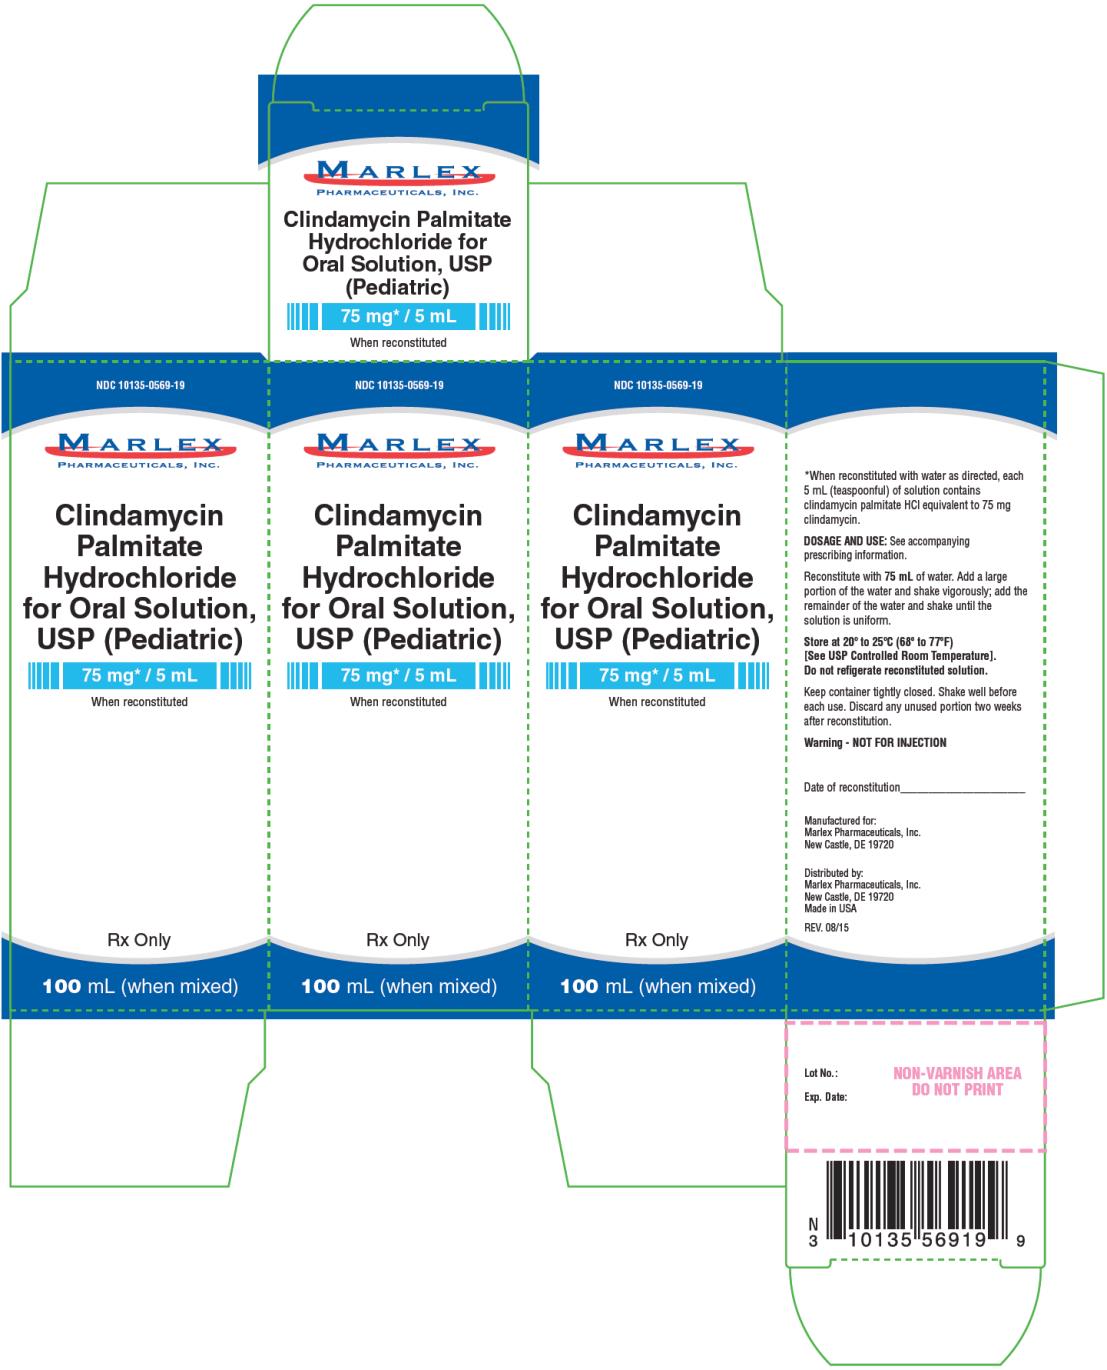 PRINCIPAL DISPLAY PANEL
Ndc 10135-0569-19
Clindamycin
Palmitate
Hydrochloride
for Oral Solution,
USP (Pediatric)
75 mg* / 5 mL